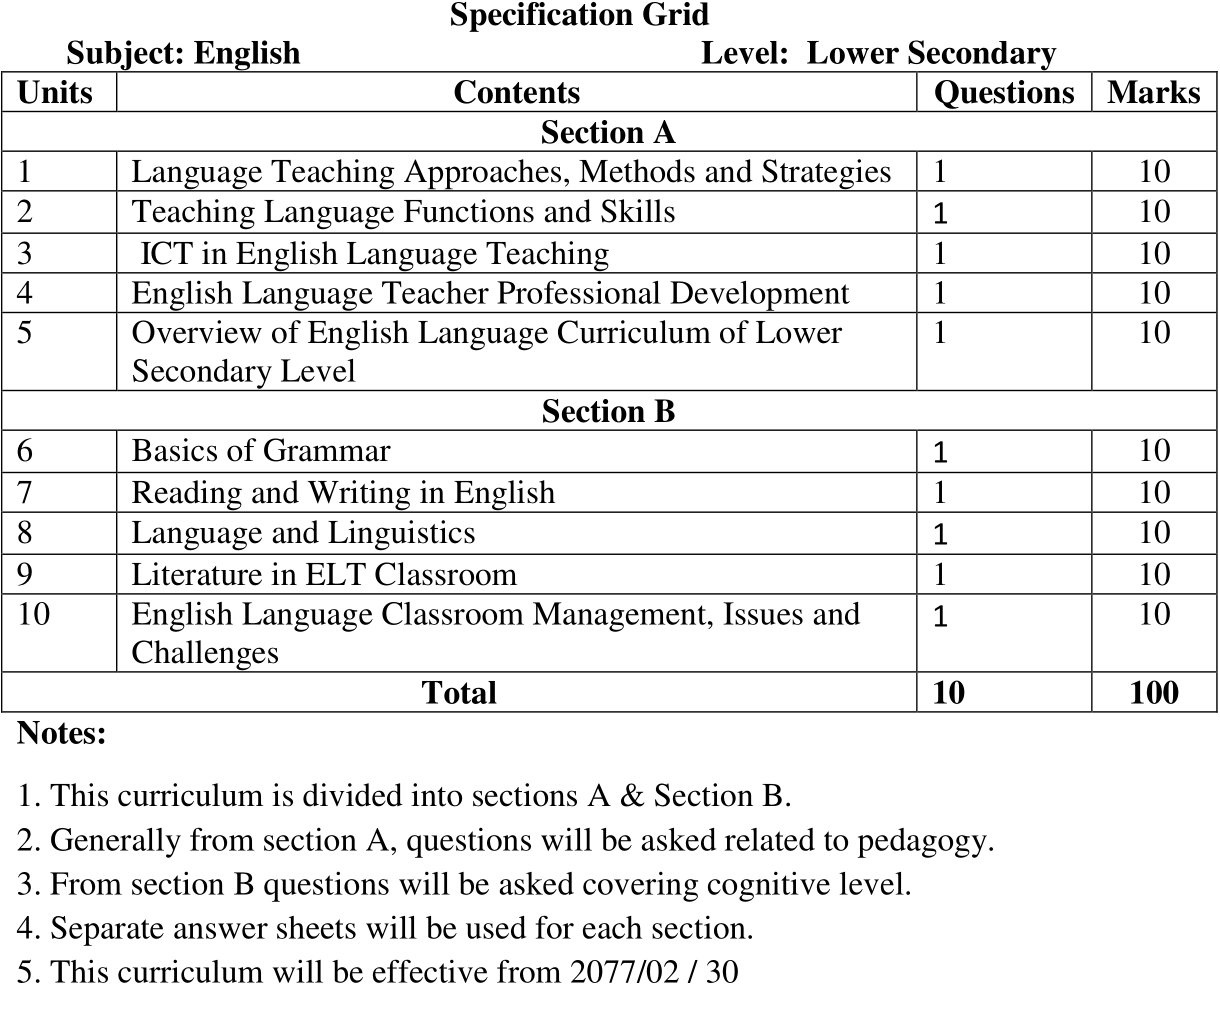 Shikshak Sewa Aayog Curriculum of Lower Secondary Level English Subject:- We will put the Shikshak Sewa Aayog lower secondary level English Subject Exam syllabus in this post.